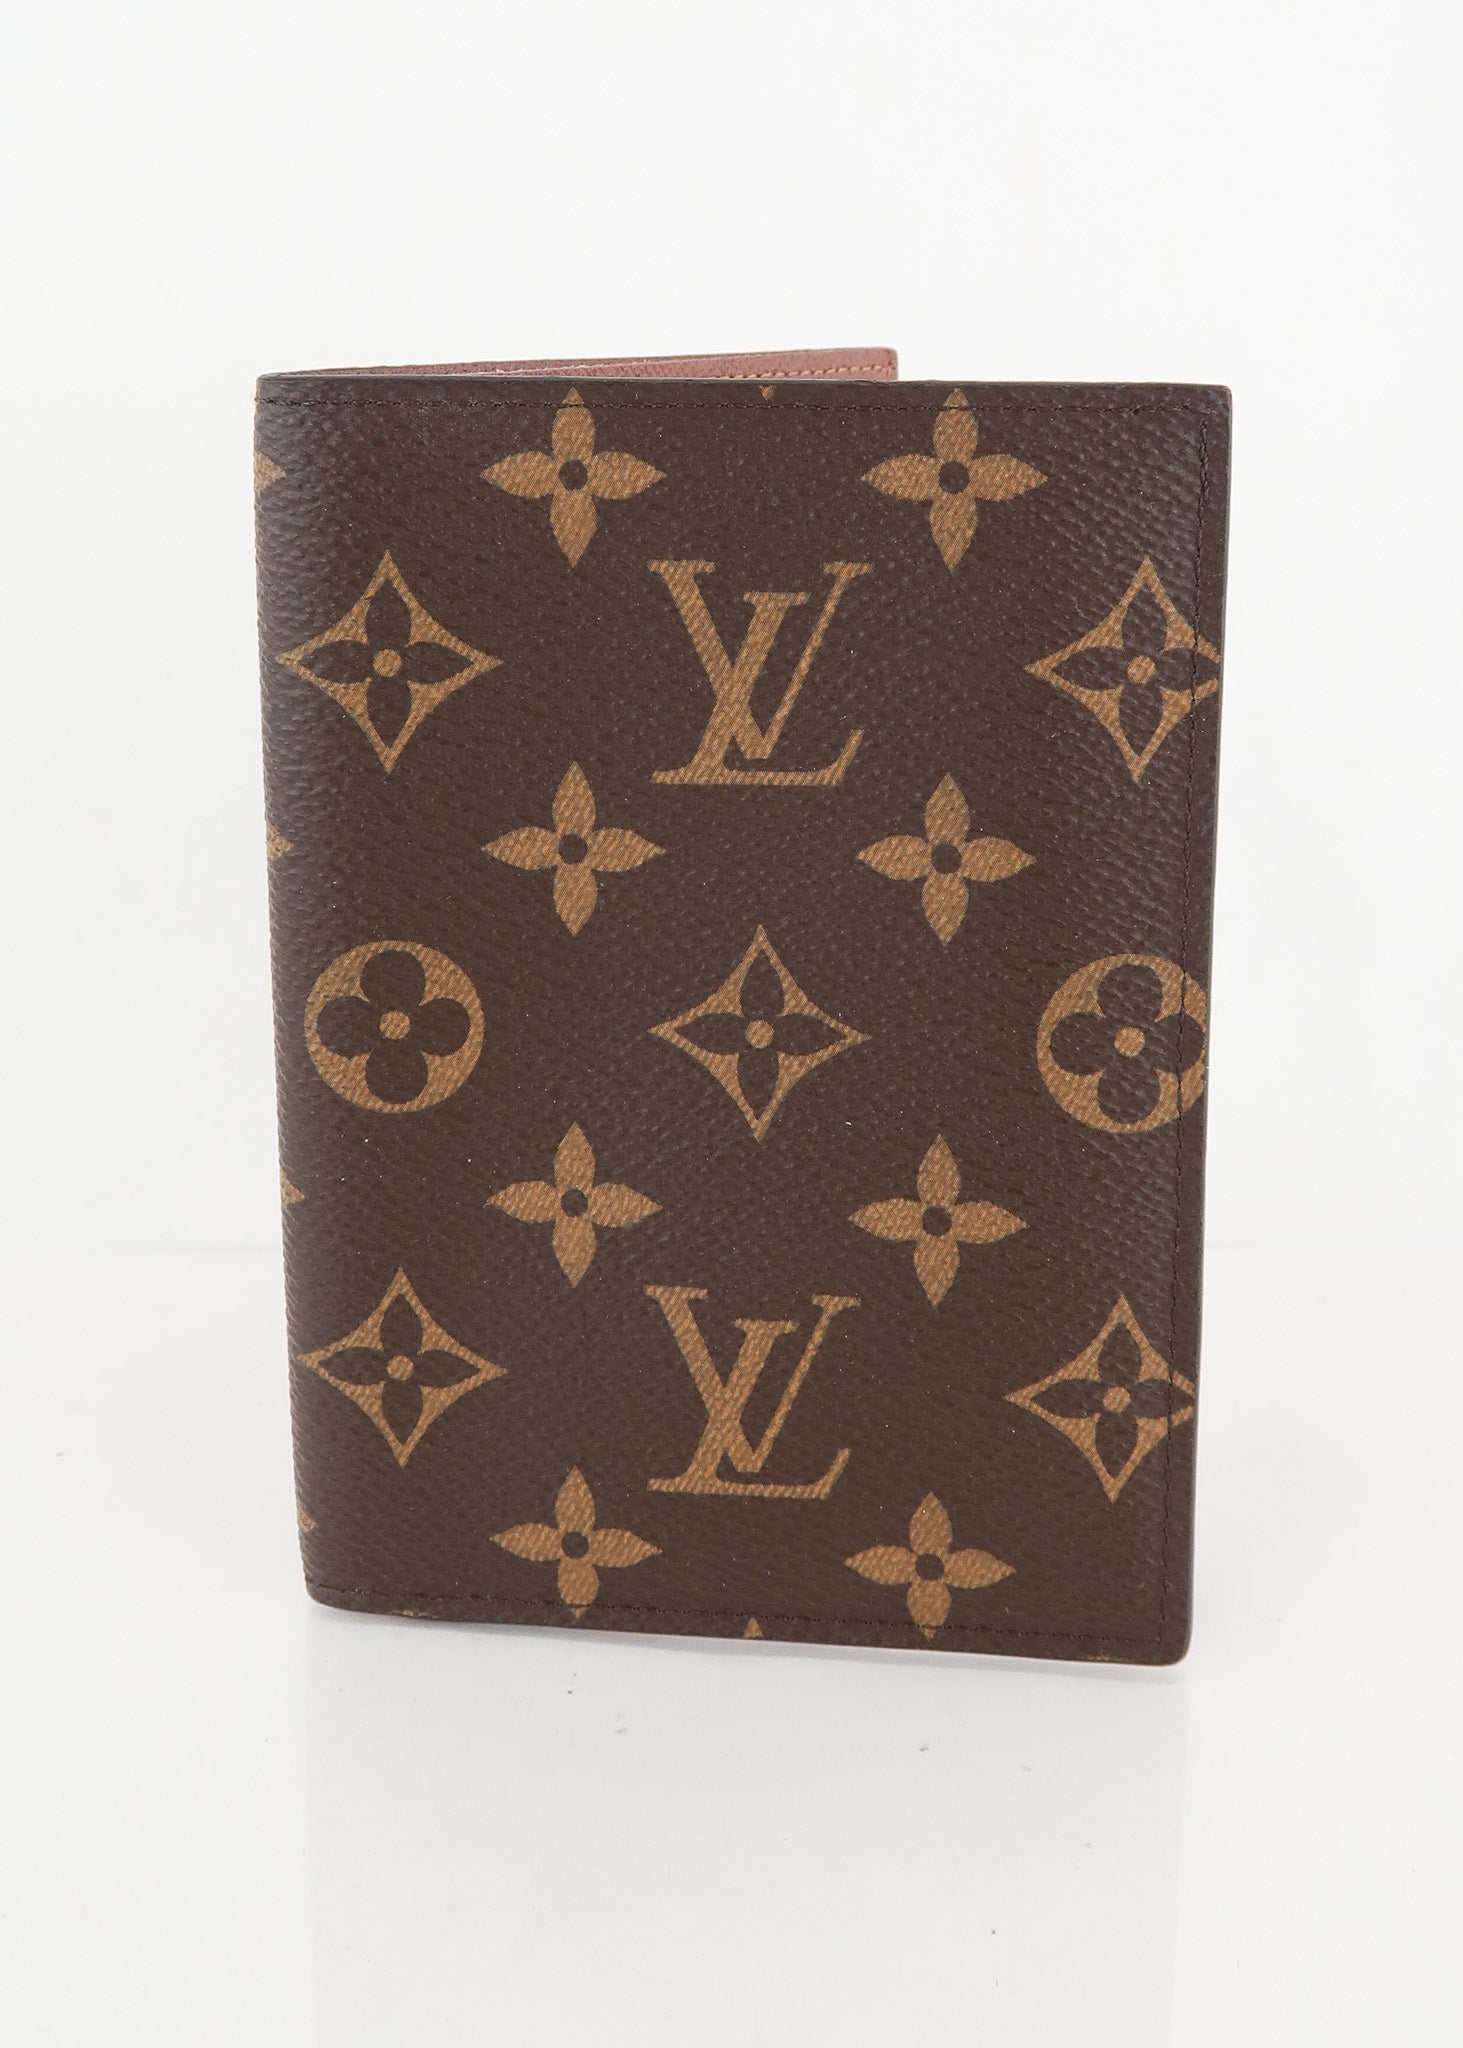 Louis Vuitton Monogram Passport Cover